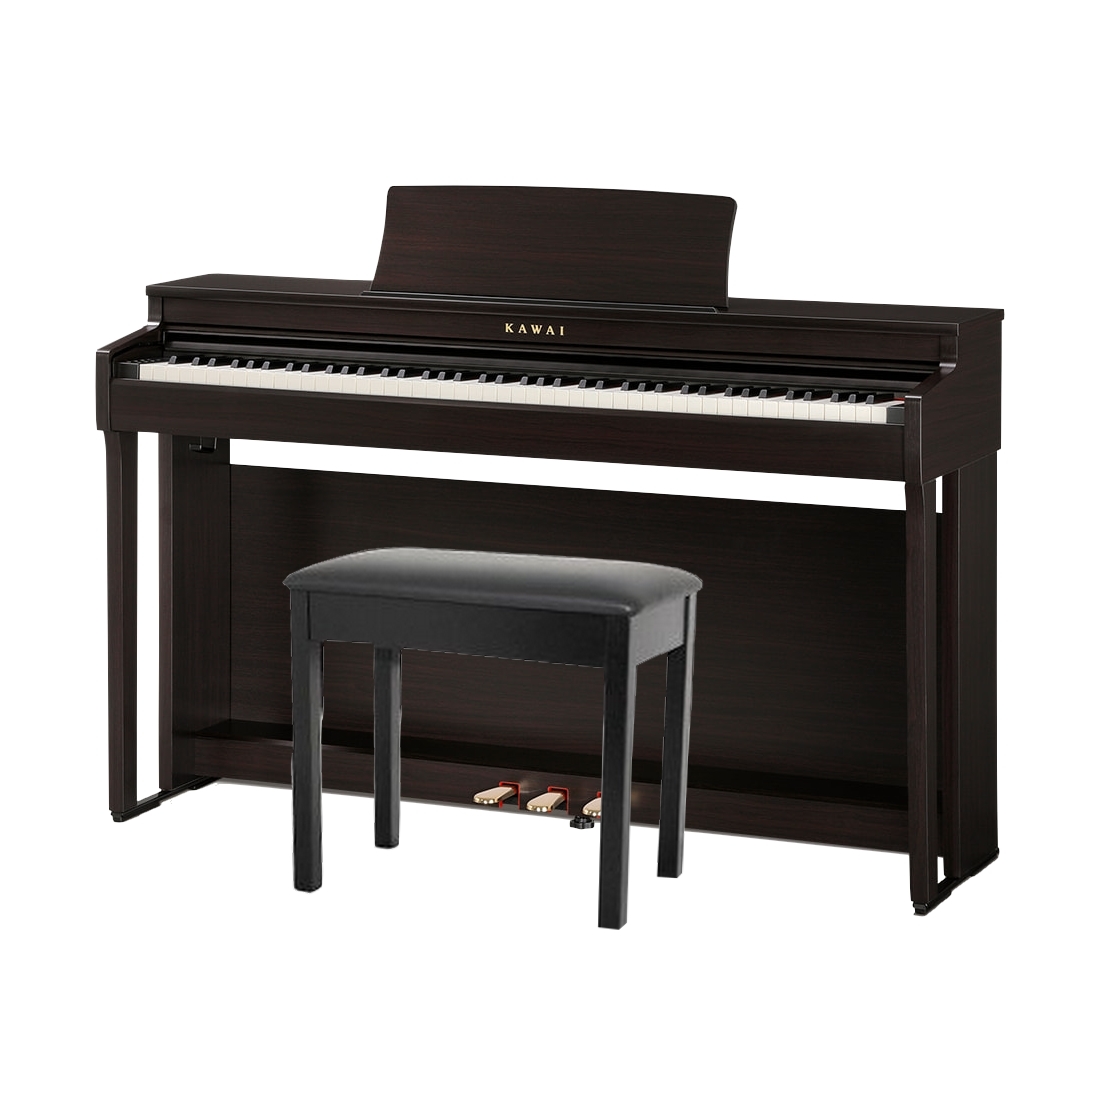 KAWAI CN201 R - цифровое пианино, механика Responsive Hammer III, 88 клавиш, цвет палисандр. купить в prostore.me